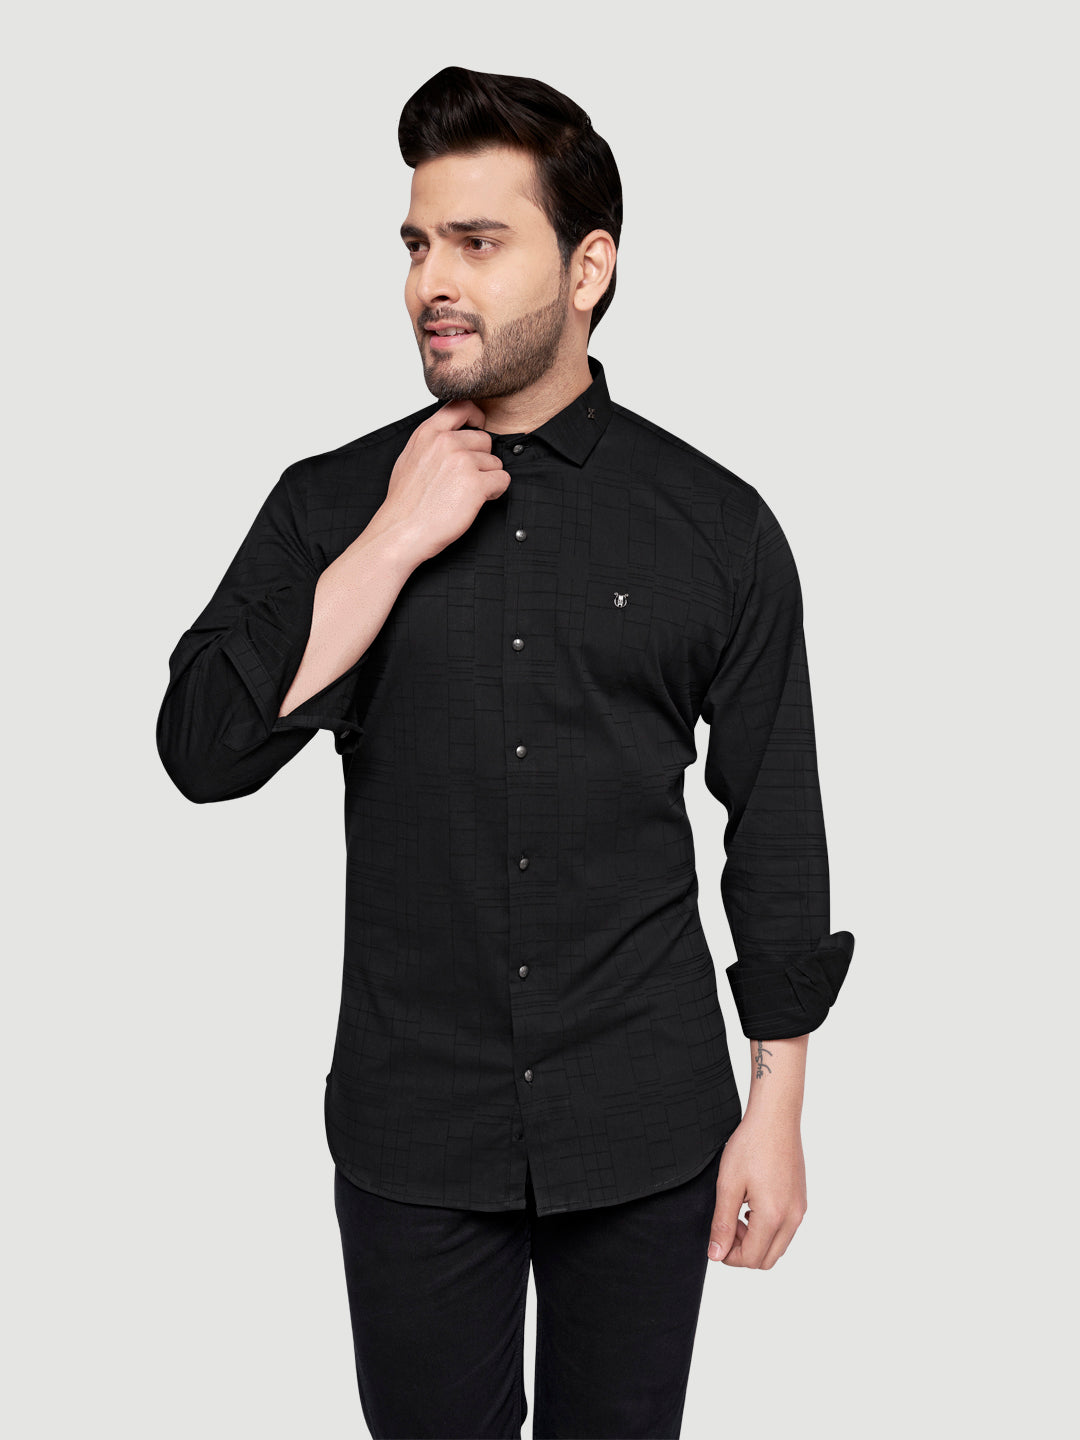 Men's Designer Shirt with Collar Accessory & Broach-3